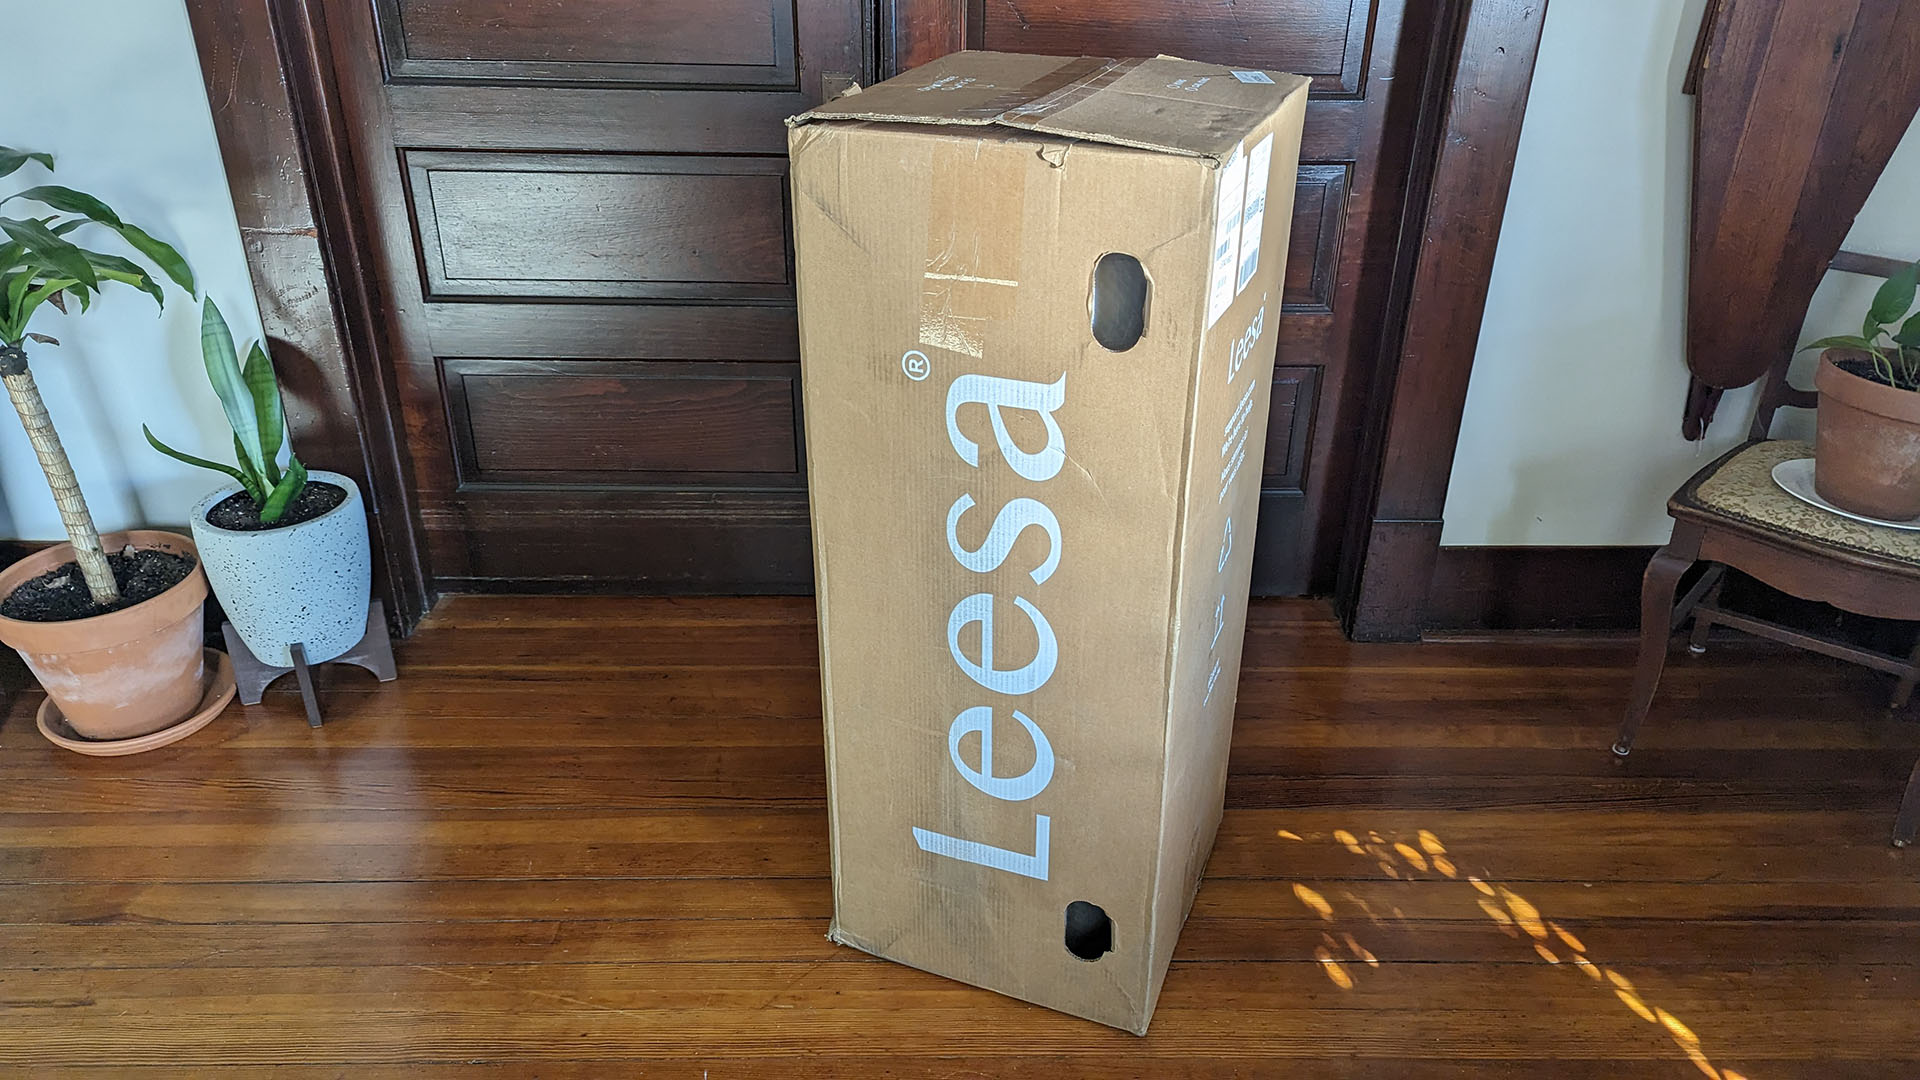 Leesa Oasis Chill Hybrid mattress in its box